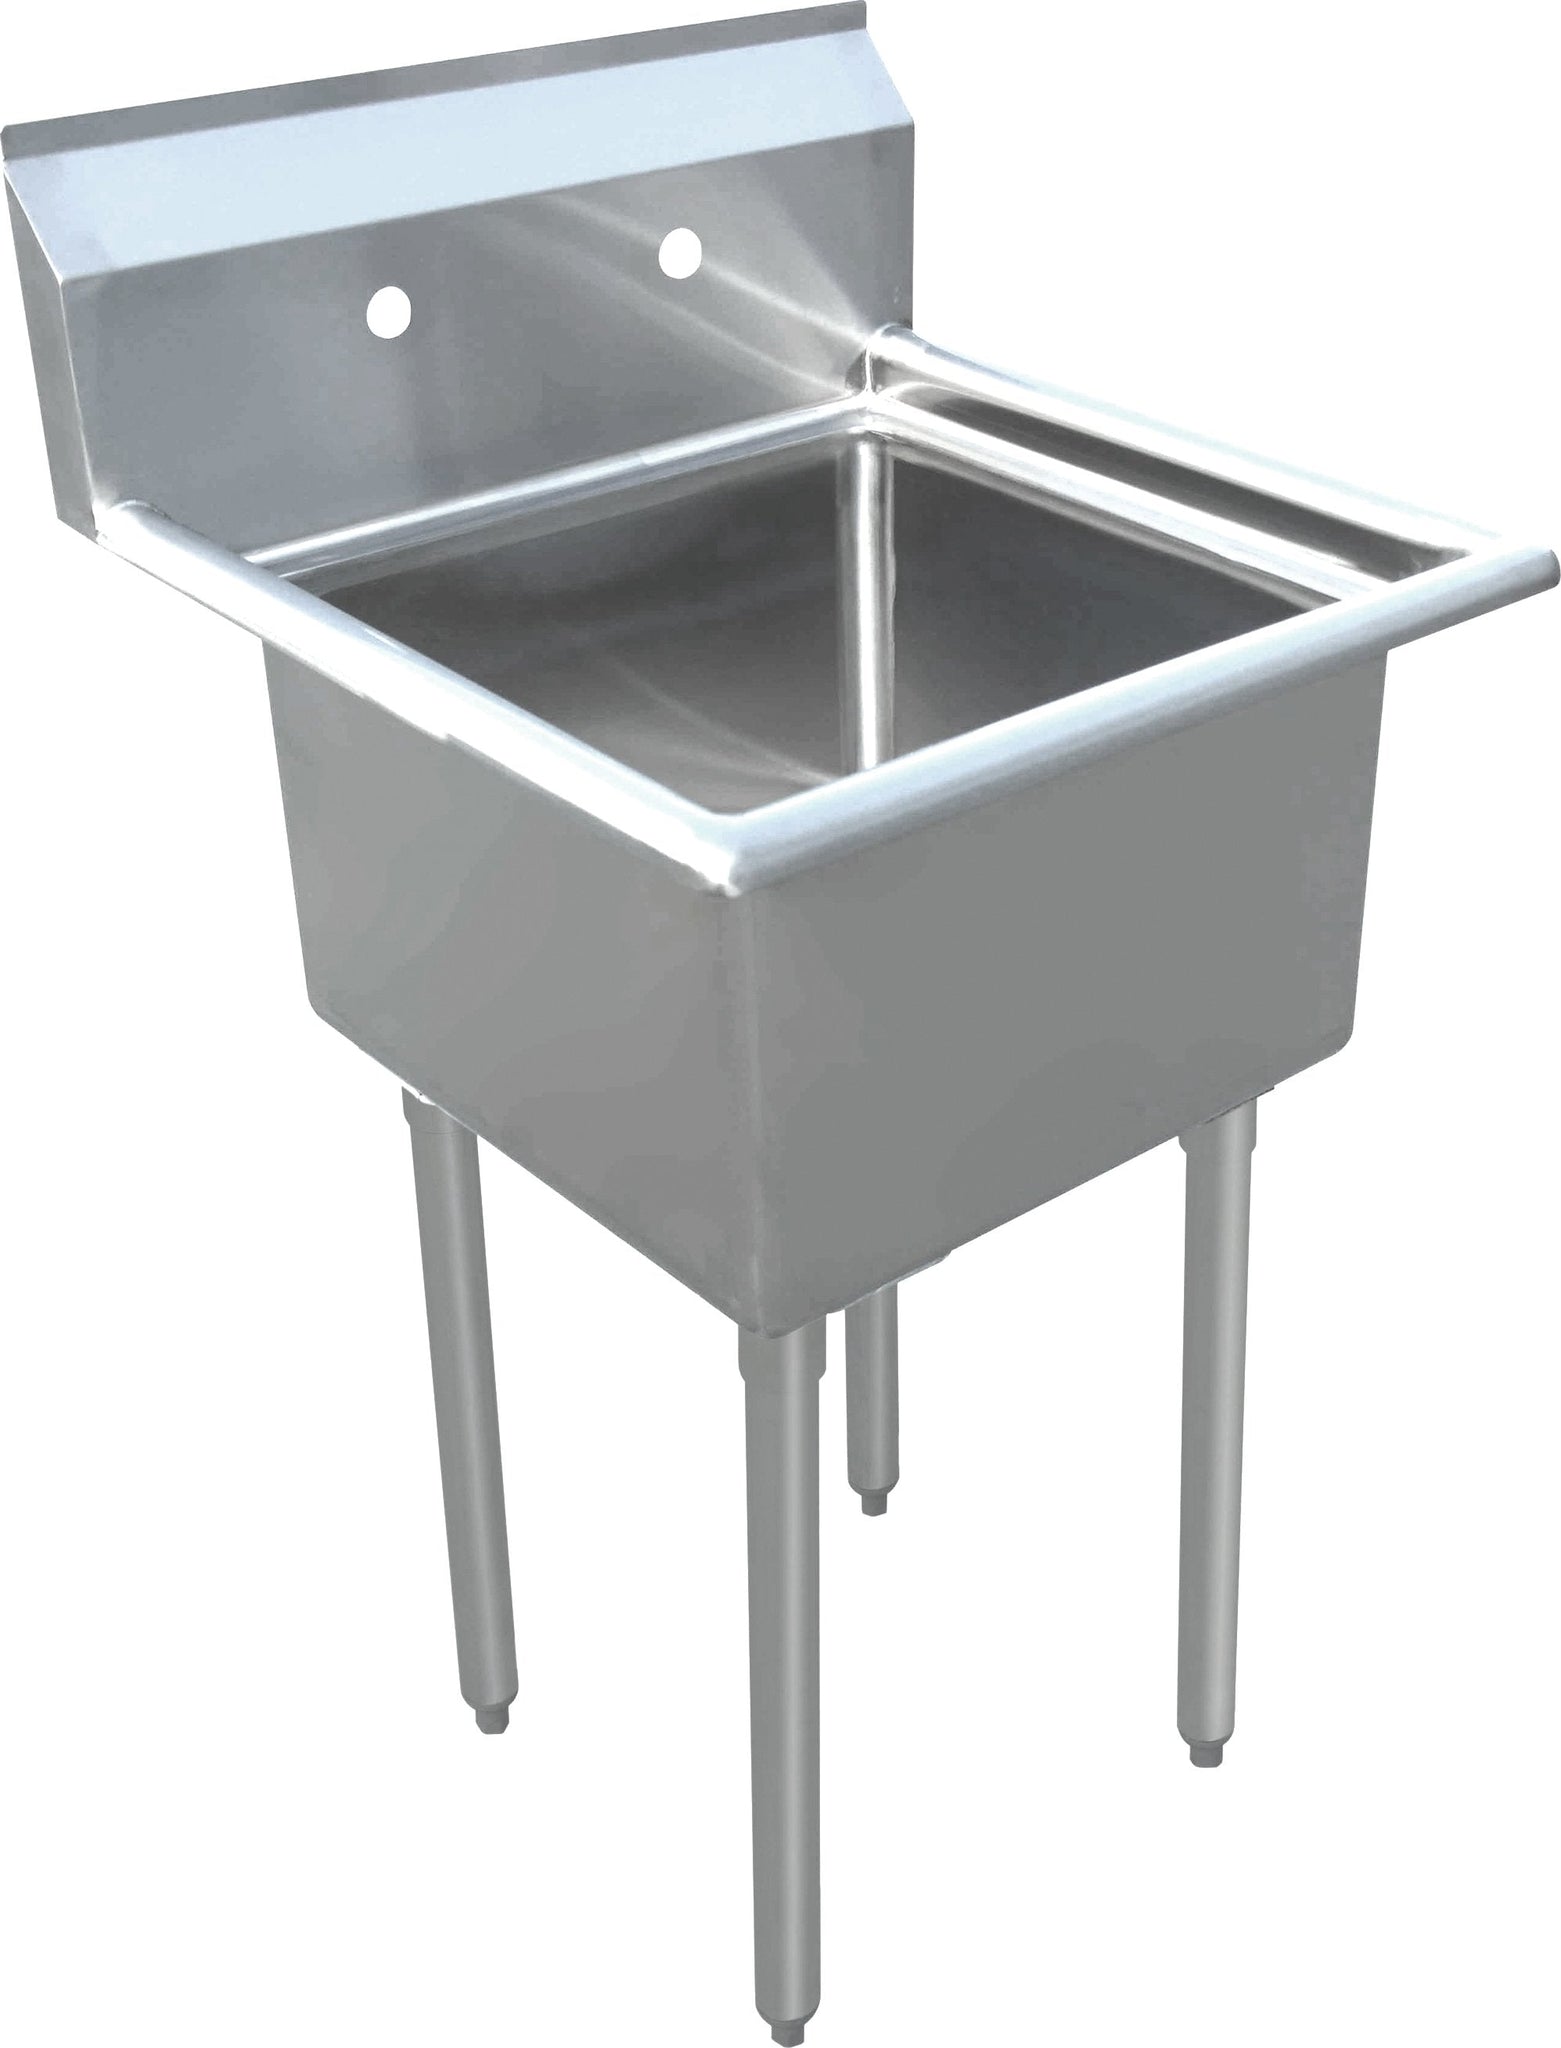 Omcan - No Drain Board 18” x 21” x 14” Pot Sink with Center Drain - 43772